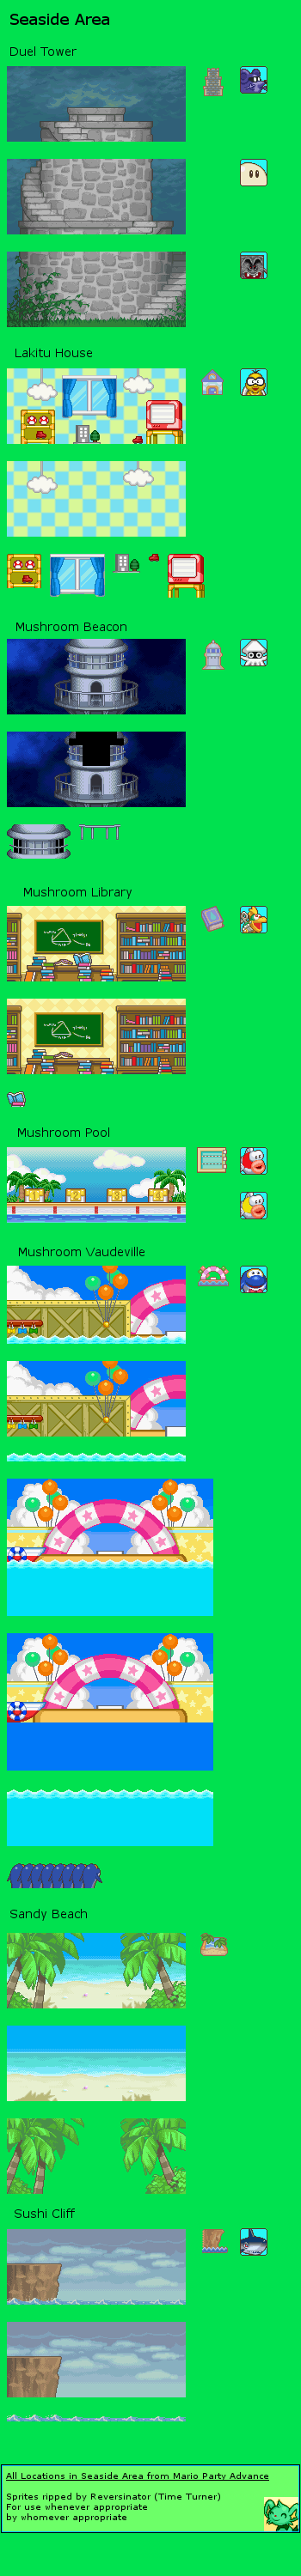 Mario Party Advance - Seaside Area